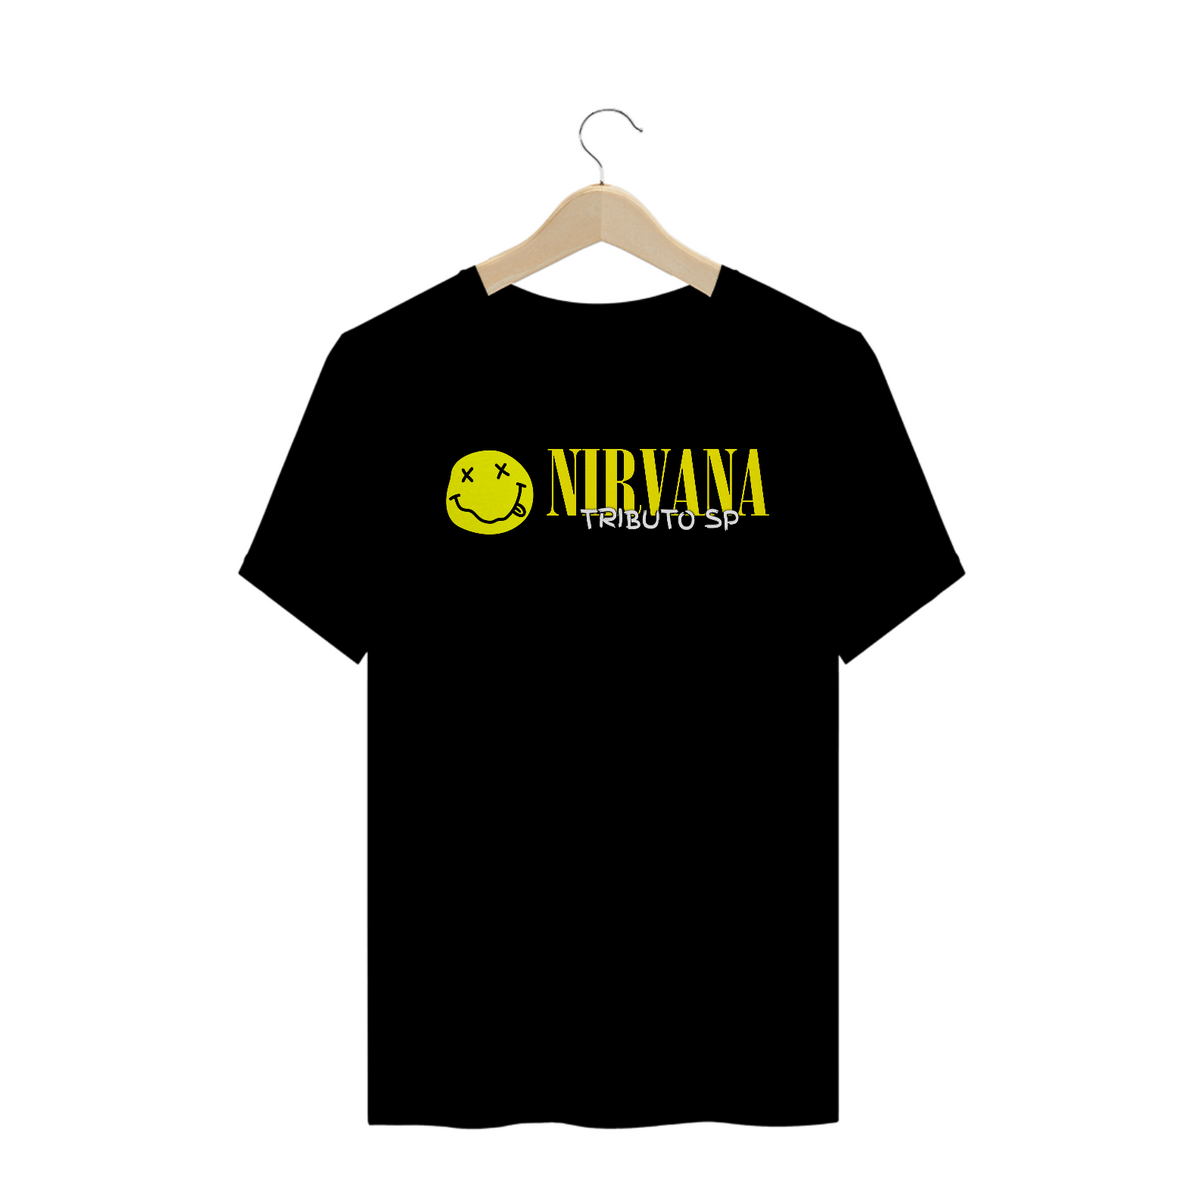 Nome do produto: Camiseta -  Nirvana Tributo SP